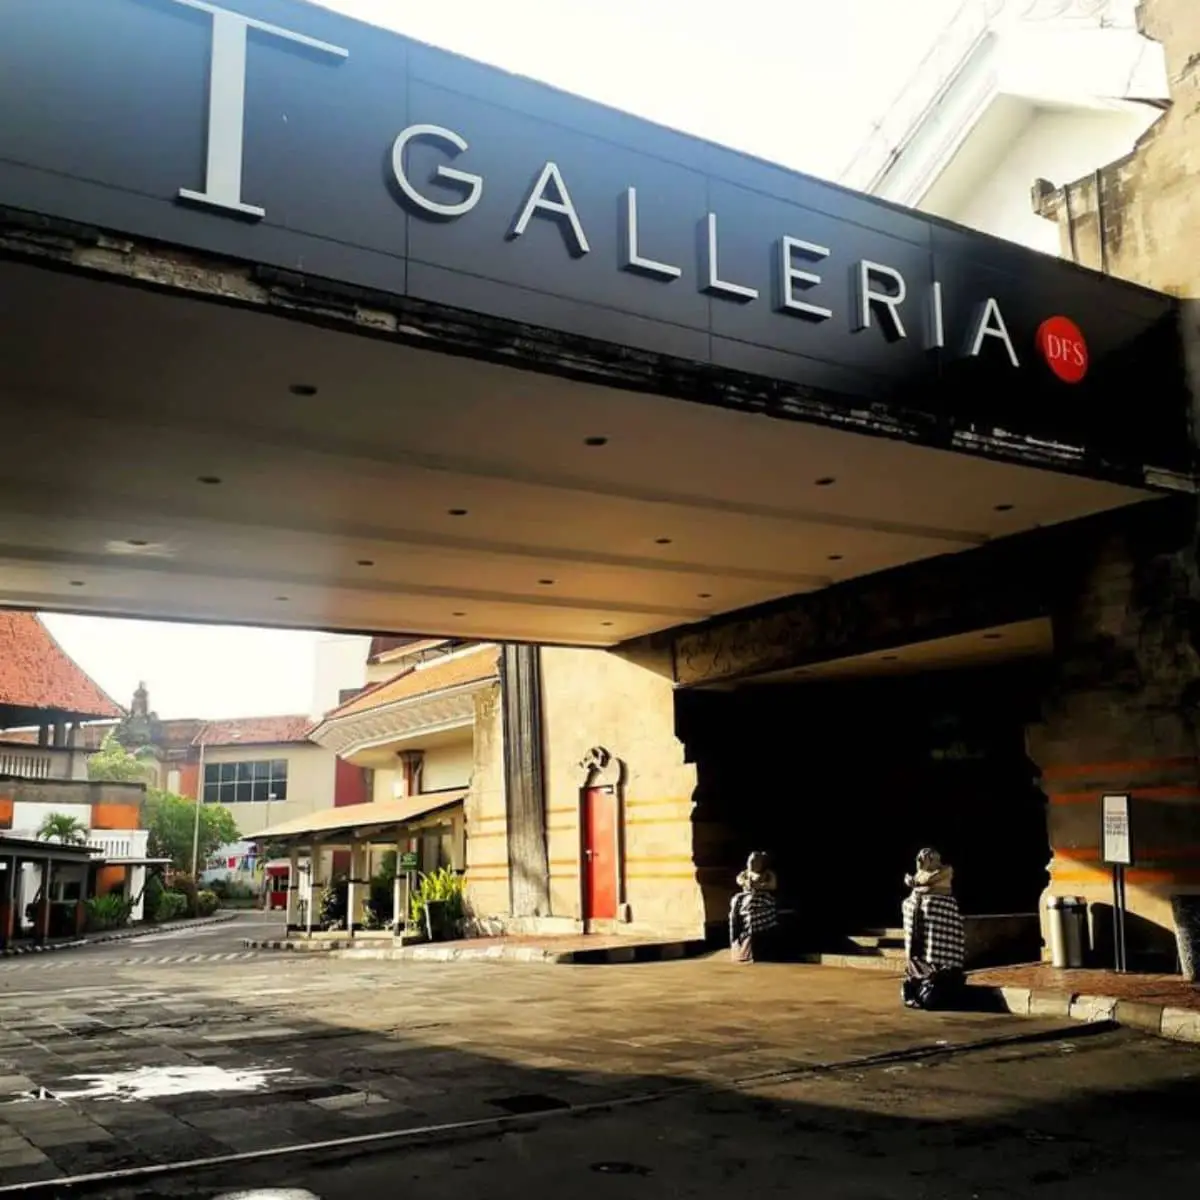 T Galleria by DFS